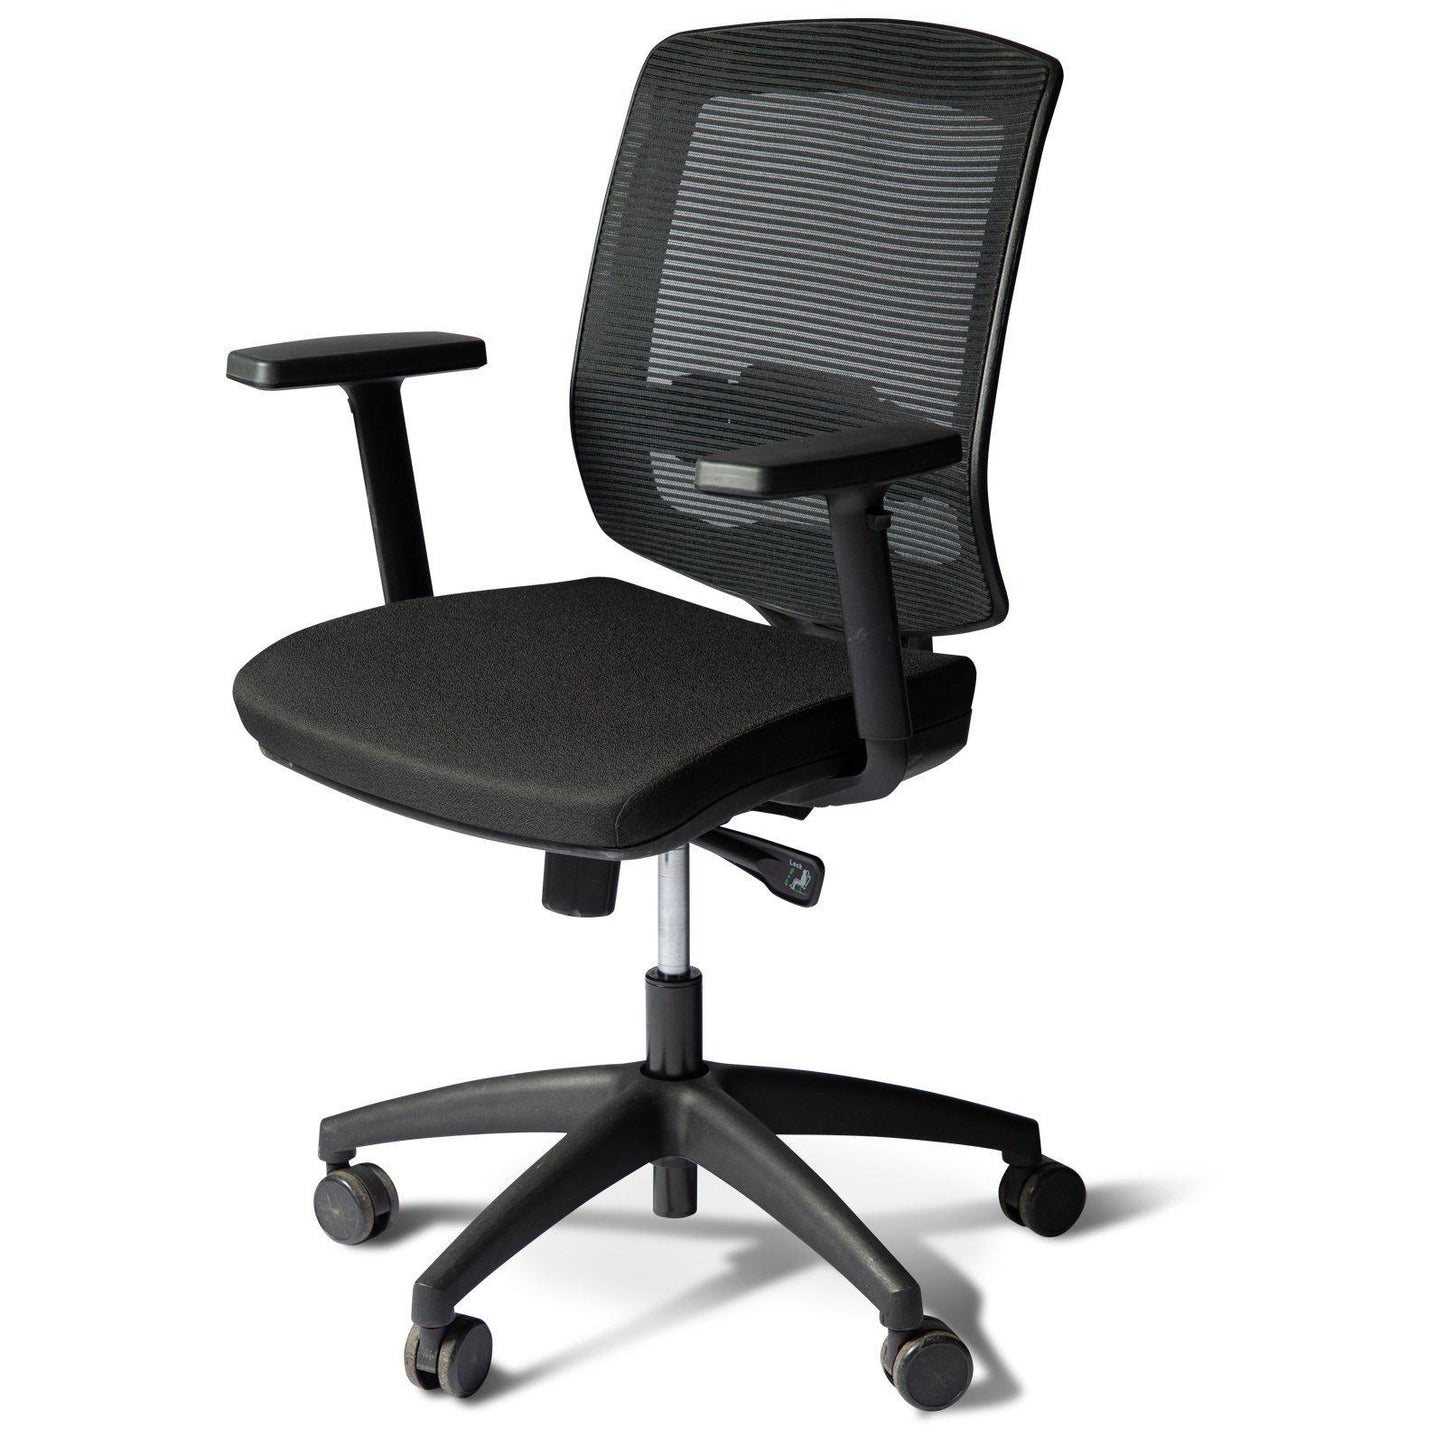 Chaise de bureau ergonomique occasion - Noir - 50 x 45 x 93 cm-Bluedigo